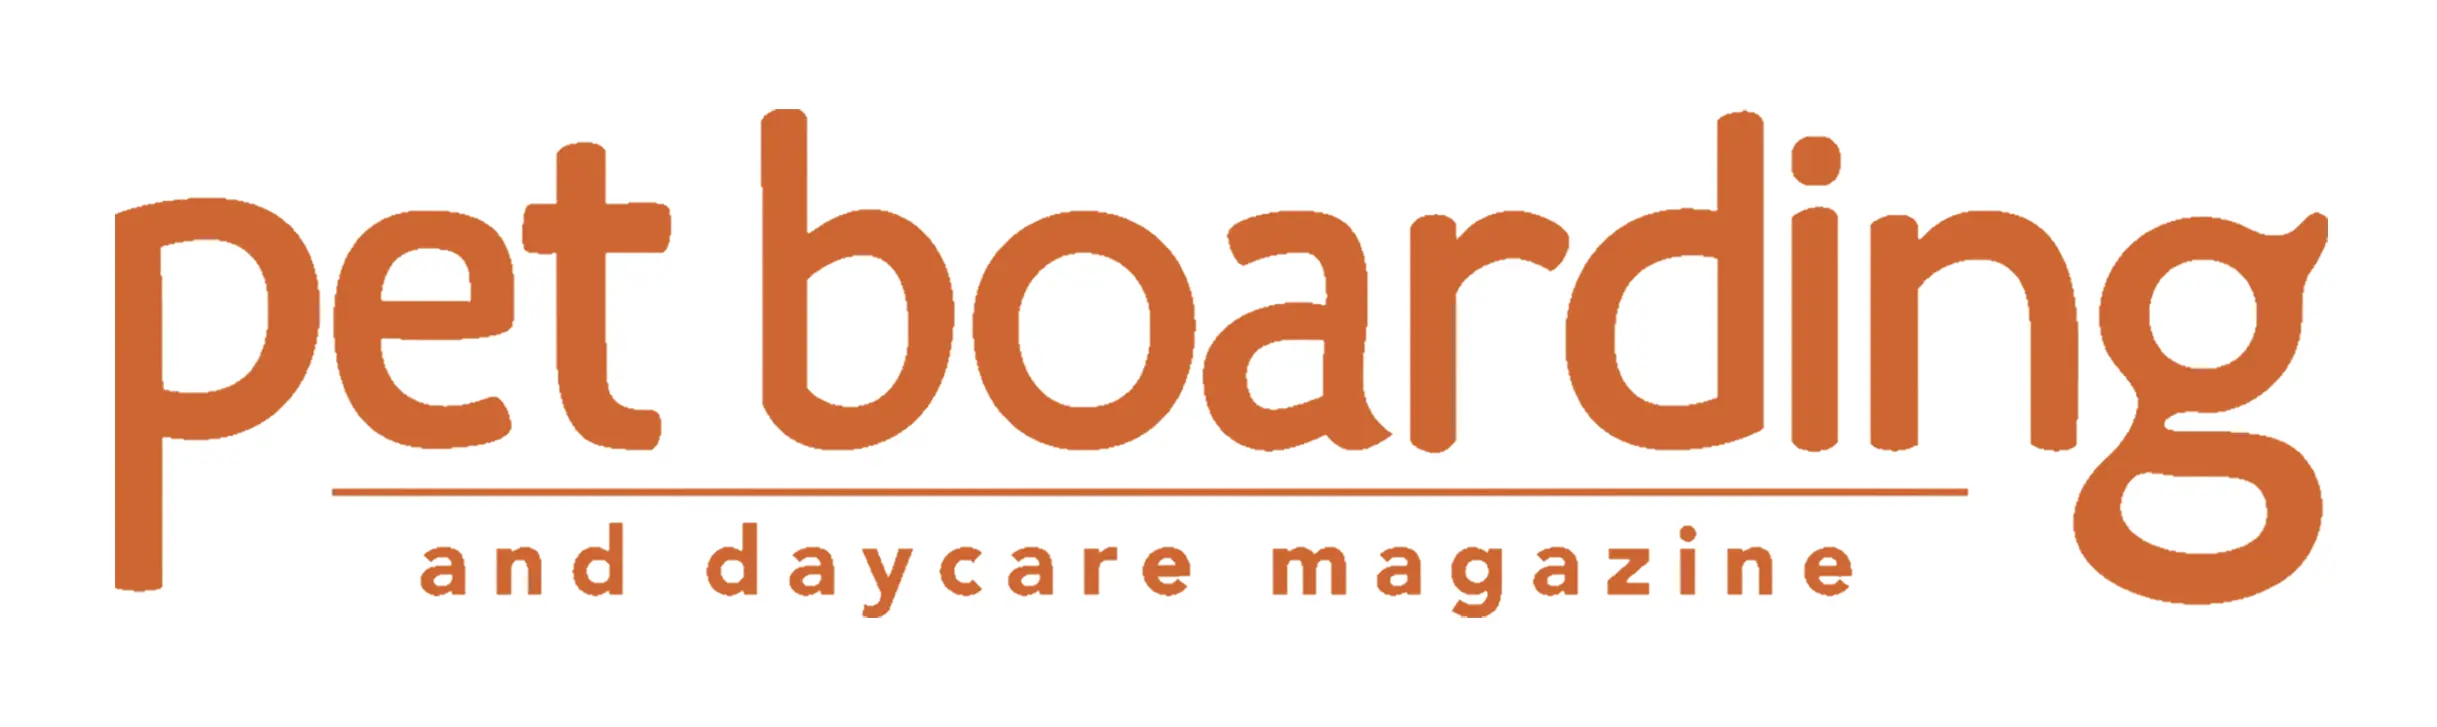 Pet Boarding and daycare magazine logo